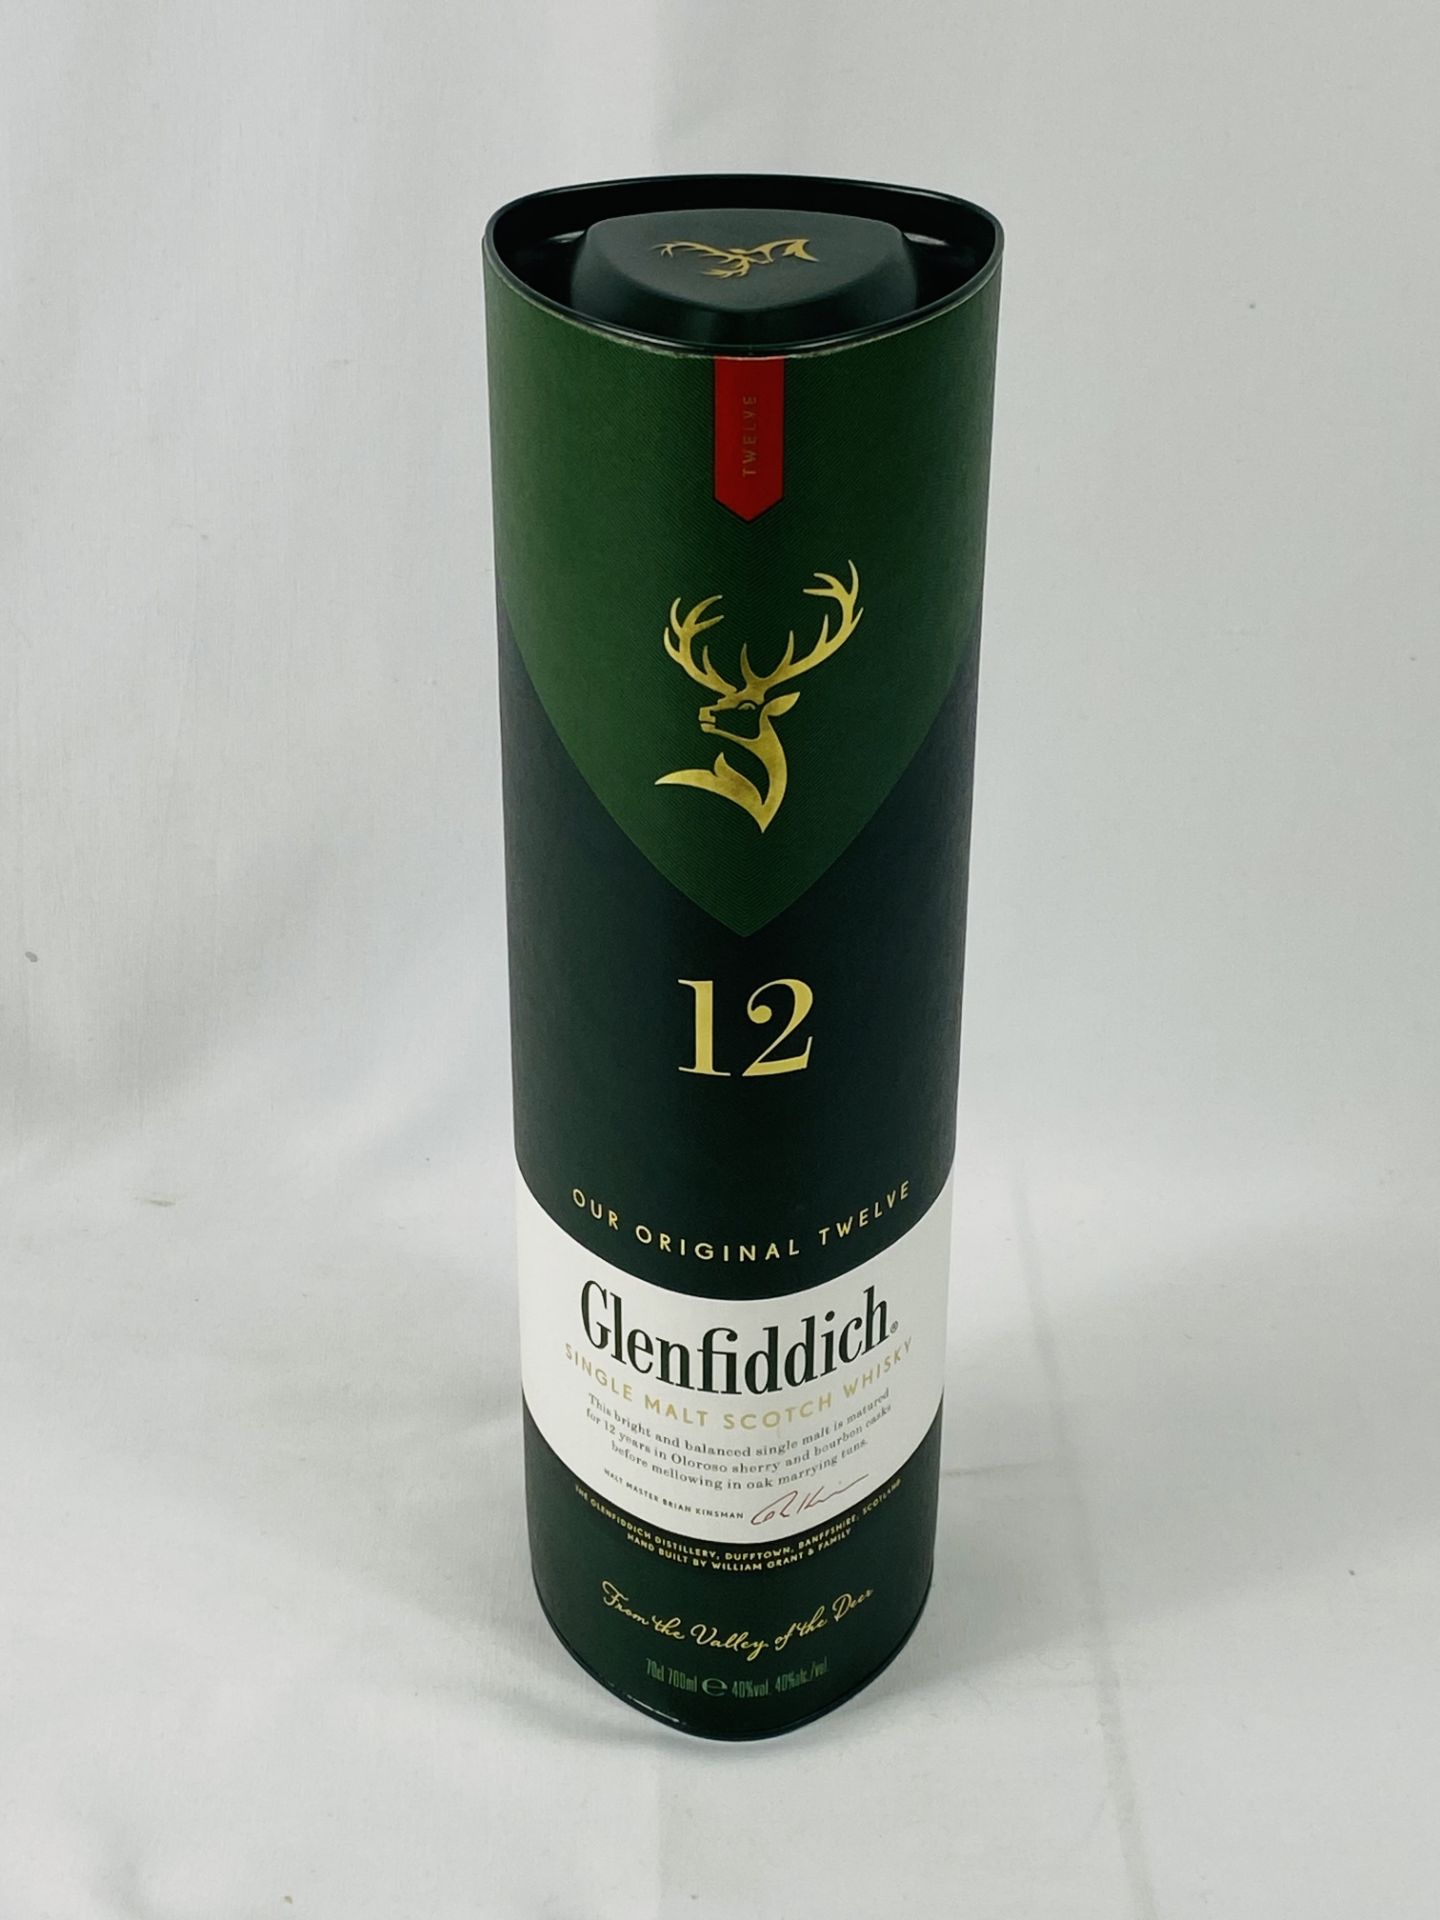 70cl bottle of Glenfiddich single malt Scotch whisky in presentation box